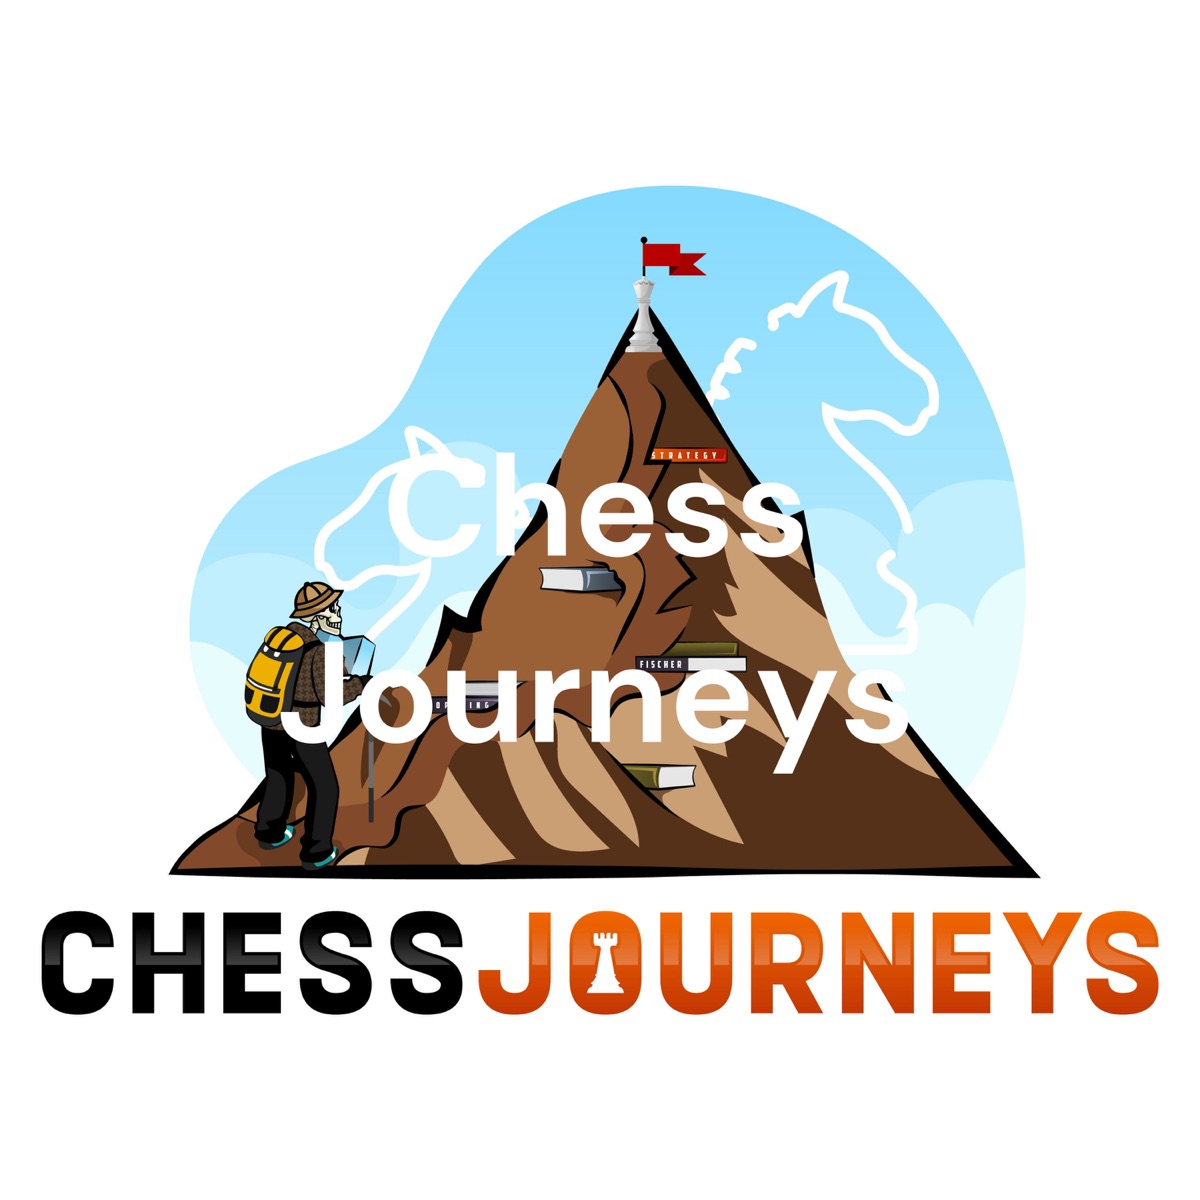 Stream ChessBase  Listen to podcast episodes online for free on